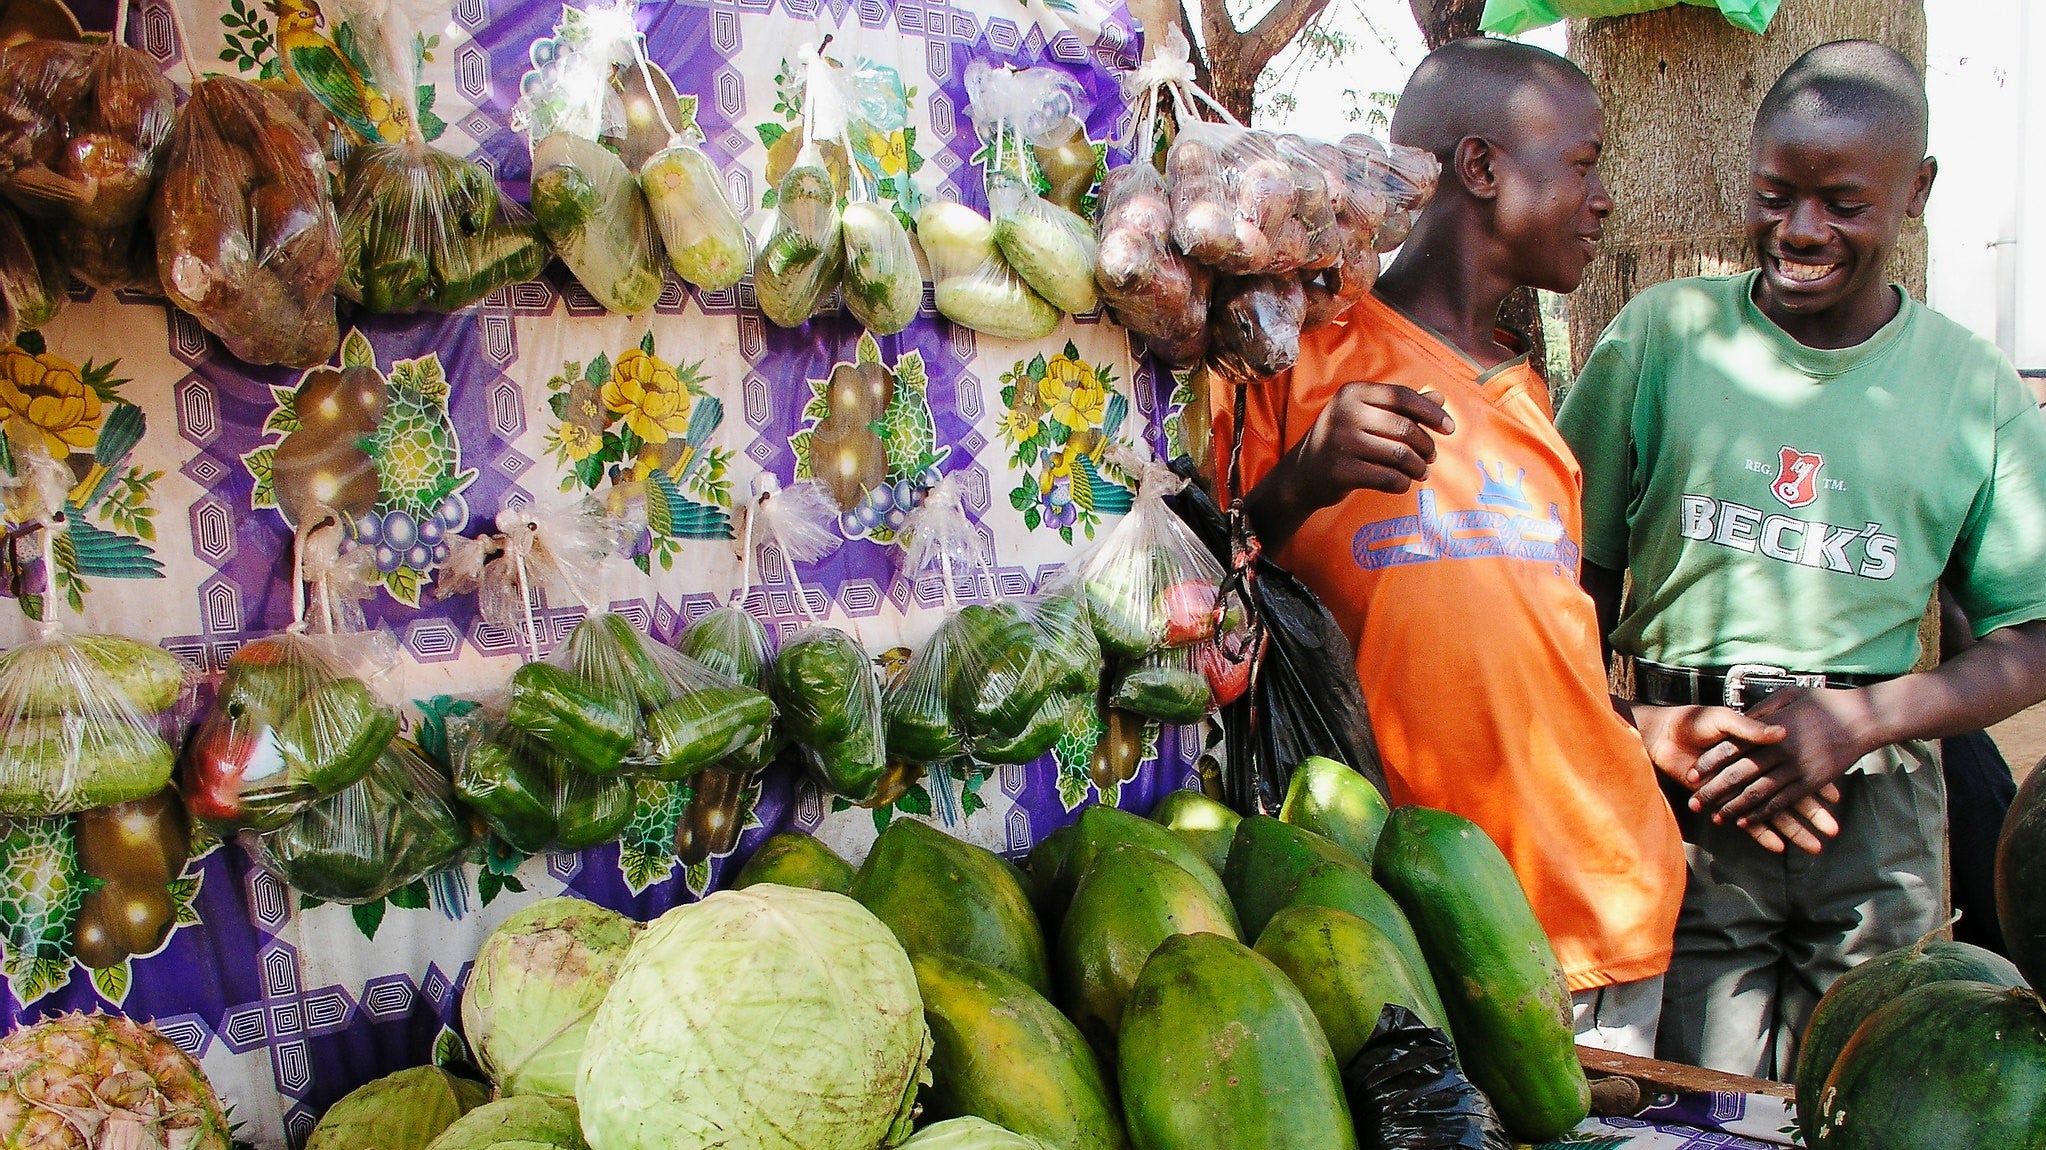 A fruit and vegetable stand in Kampala, Uganda. Photo: Arne Hoel / World Bank